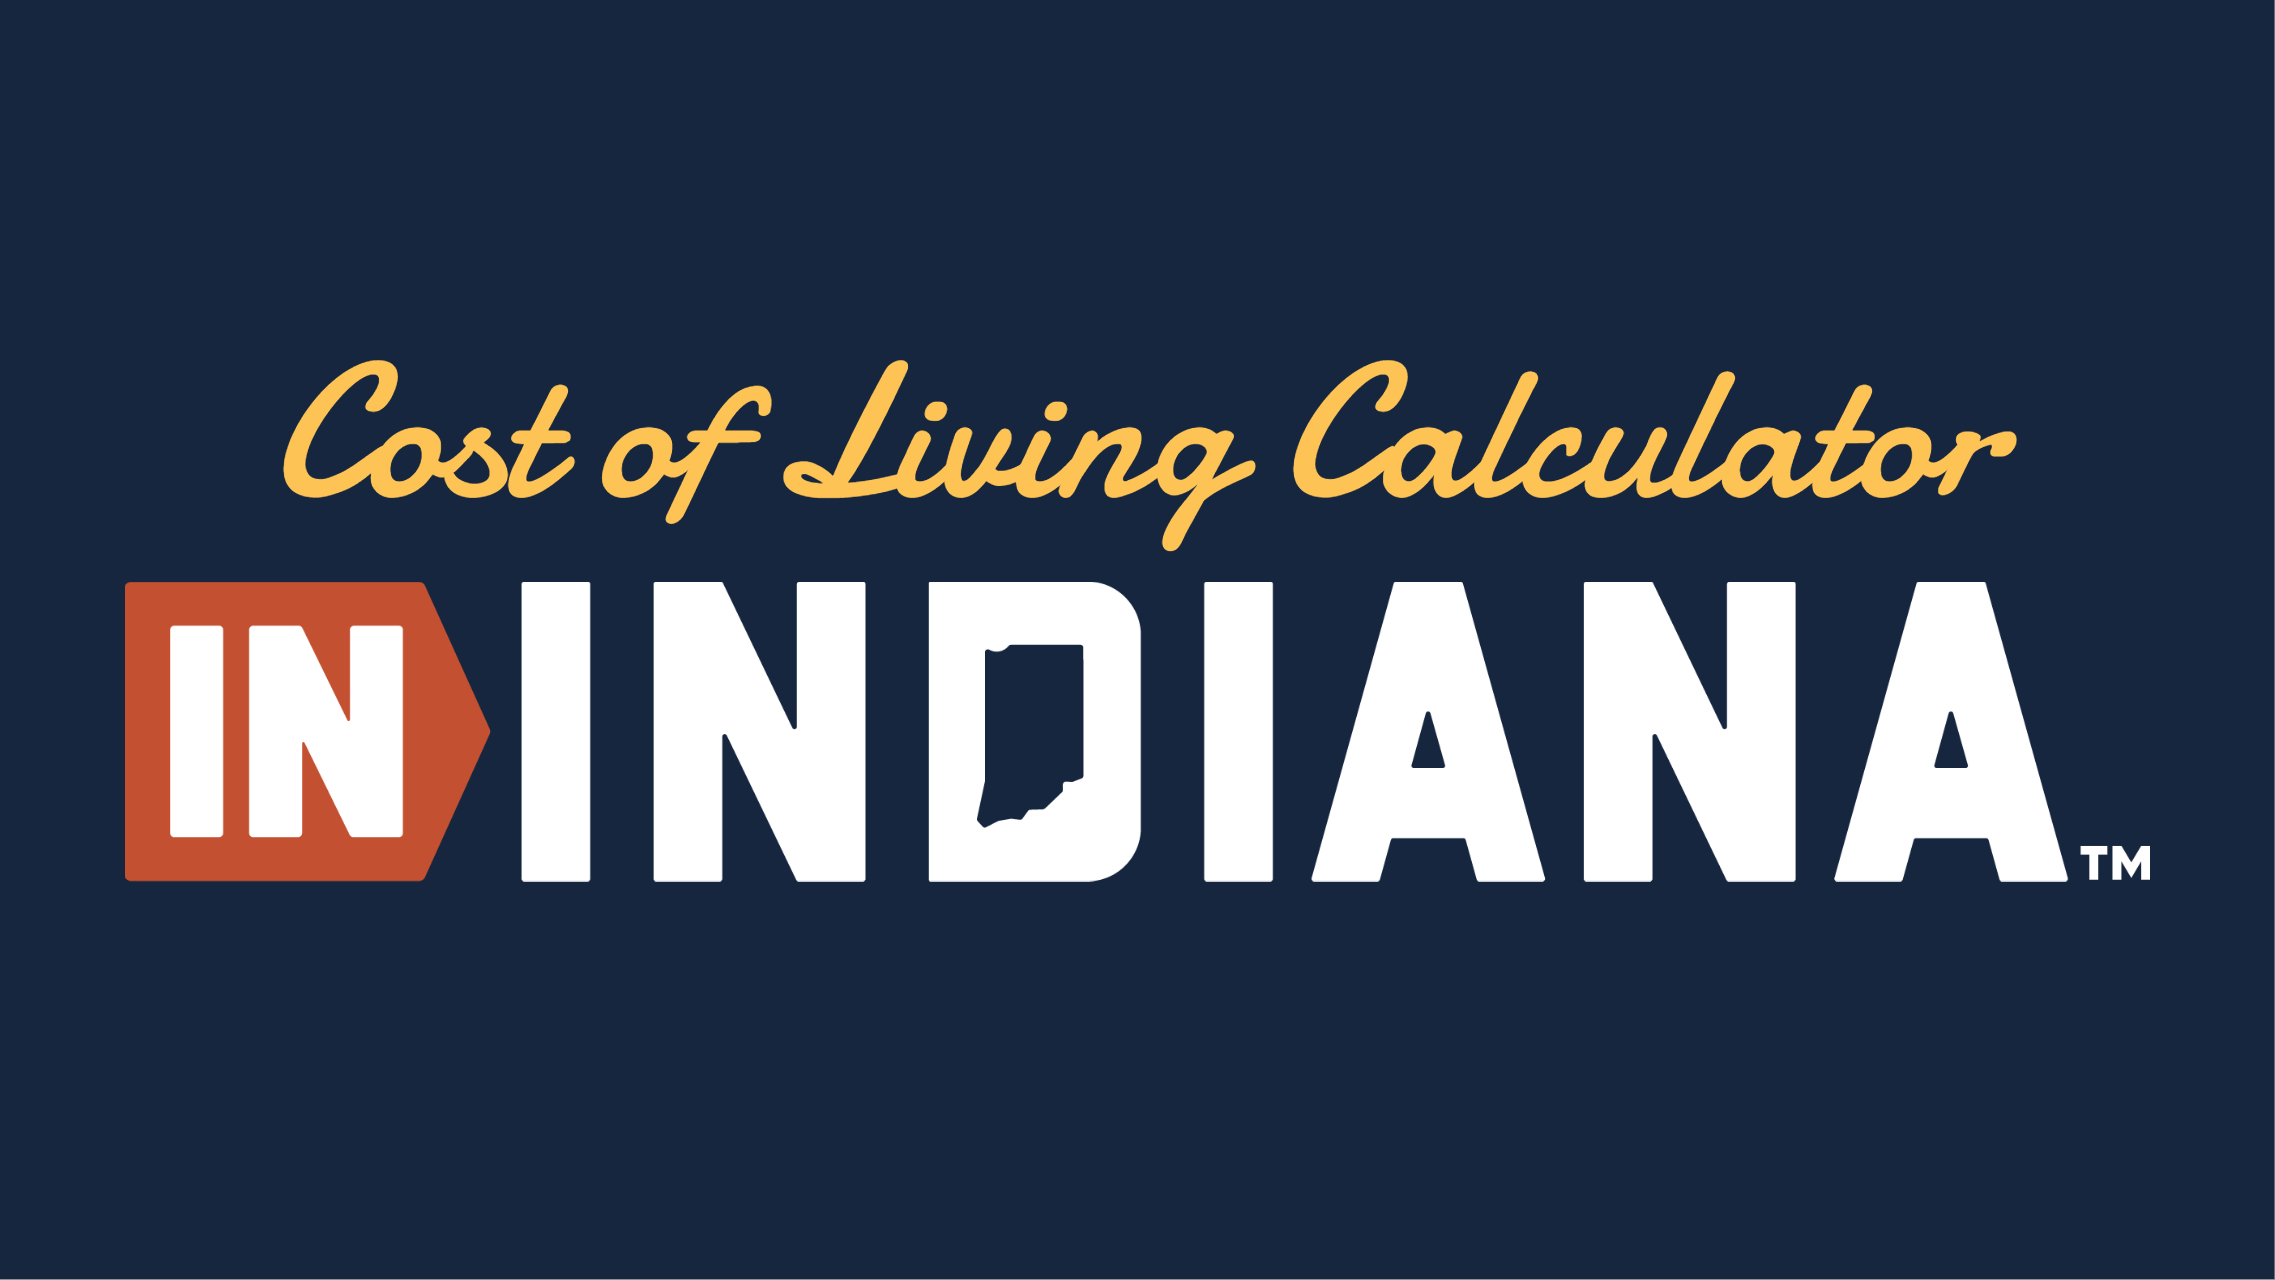 visitindiana.com/cost-of-living-calculator